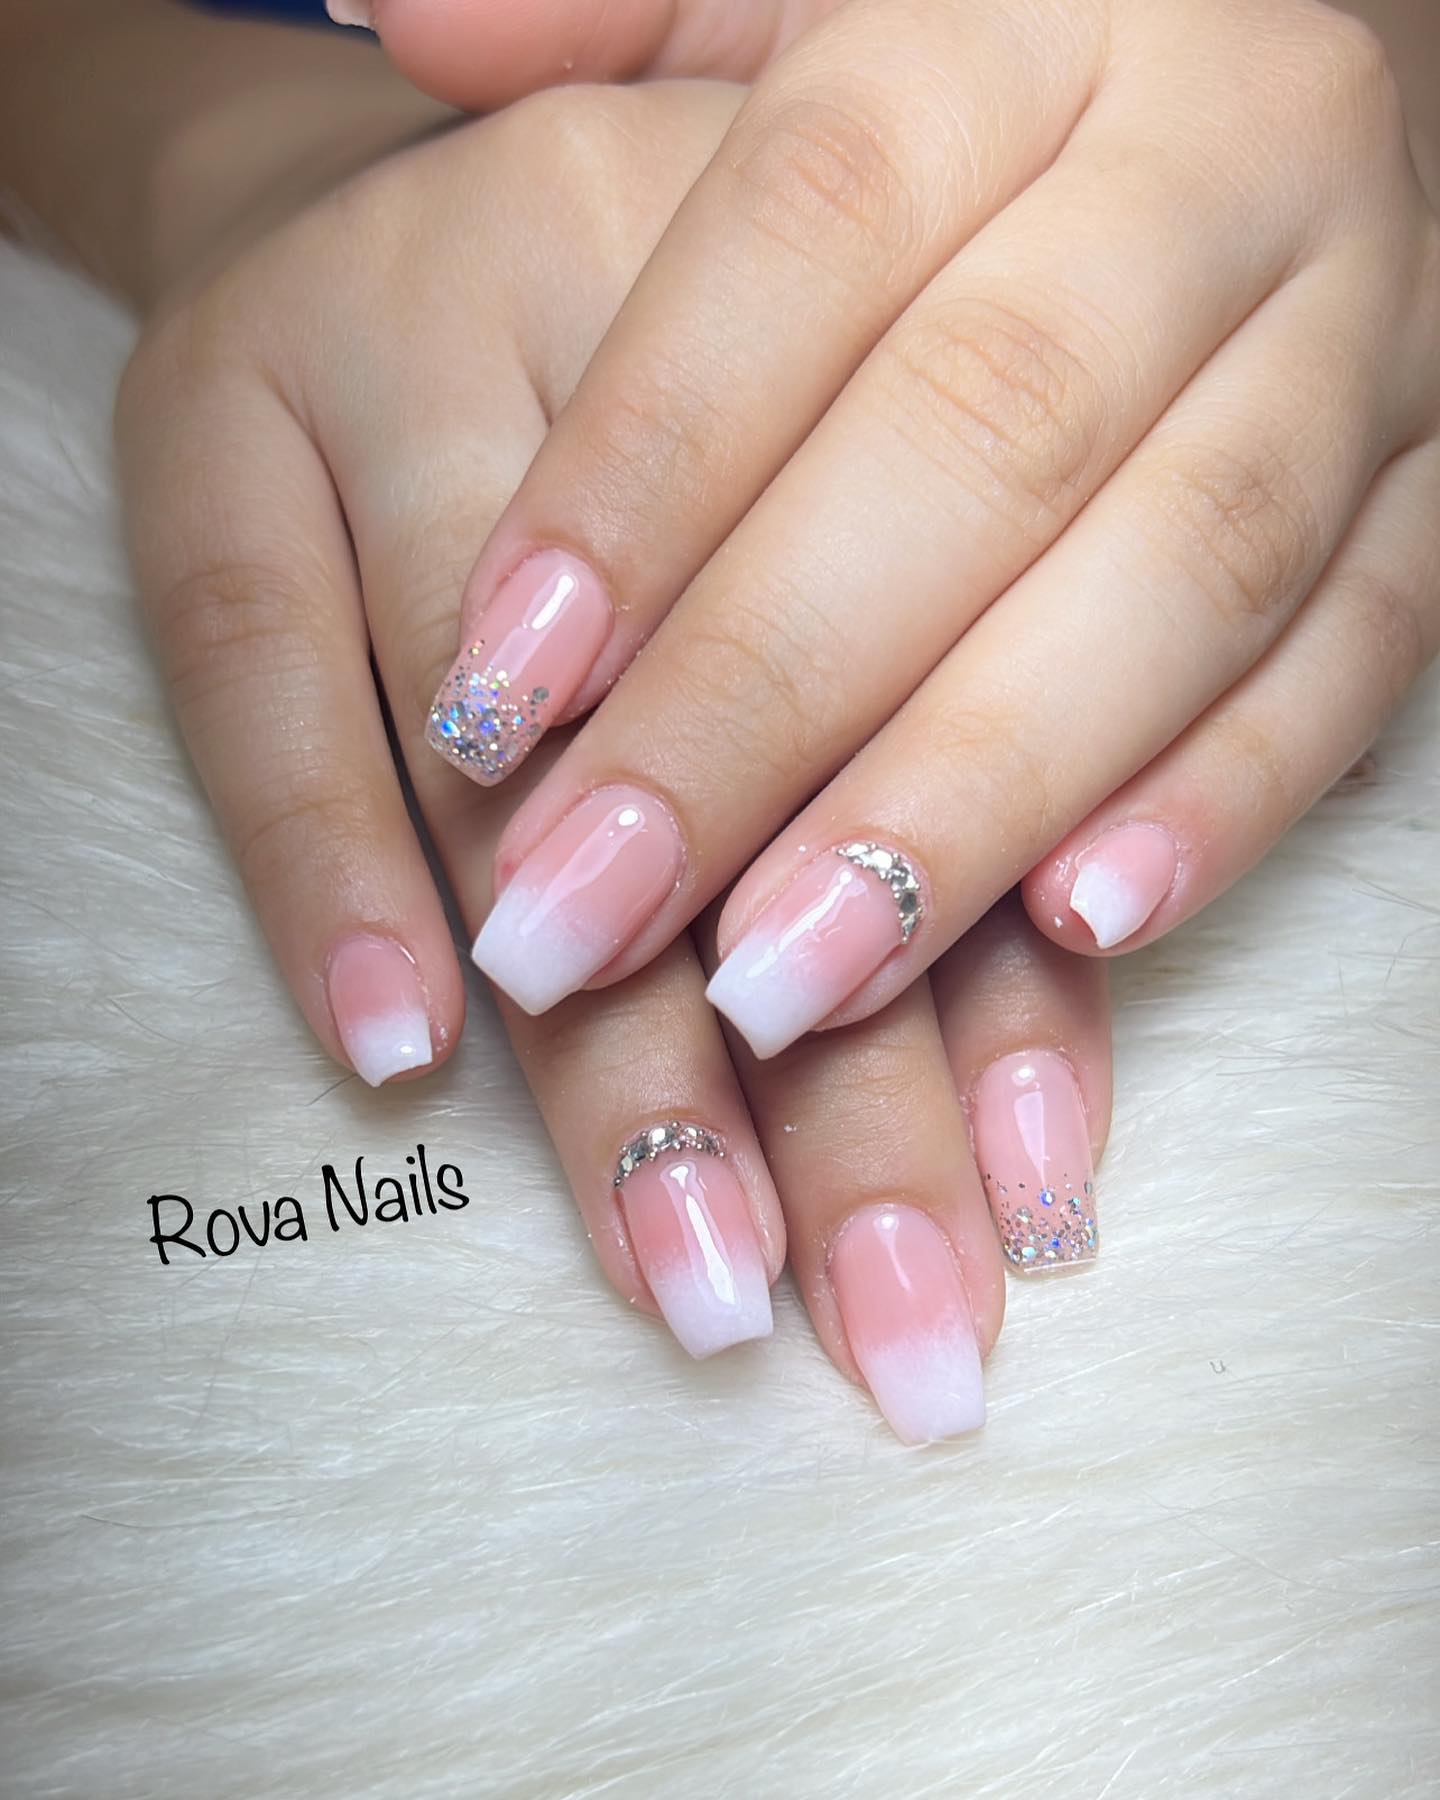 Almond Short False Nail Glitter Pink French Press on Nails for Nail Art  24pcs | eBay